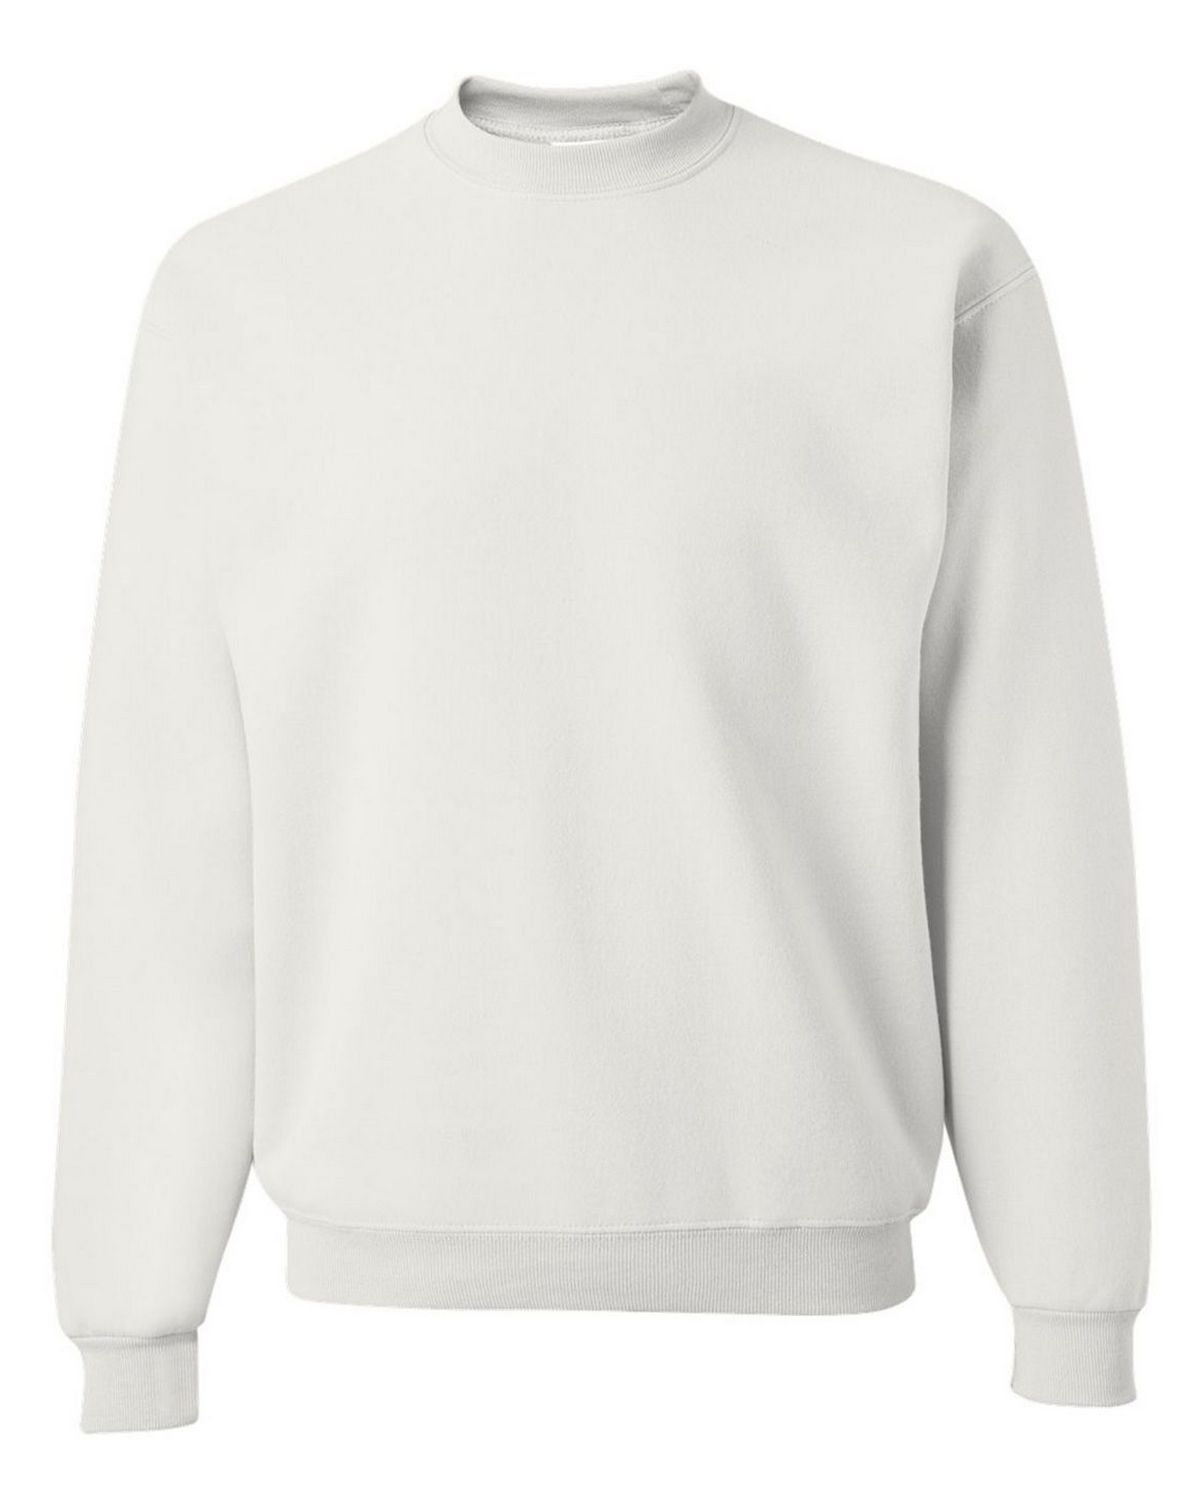 Jerzees Sweatshirt Flash Sales, 60% OFF | www.ingeniovirtual.com